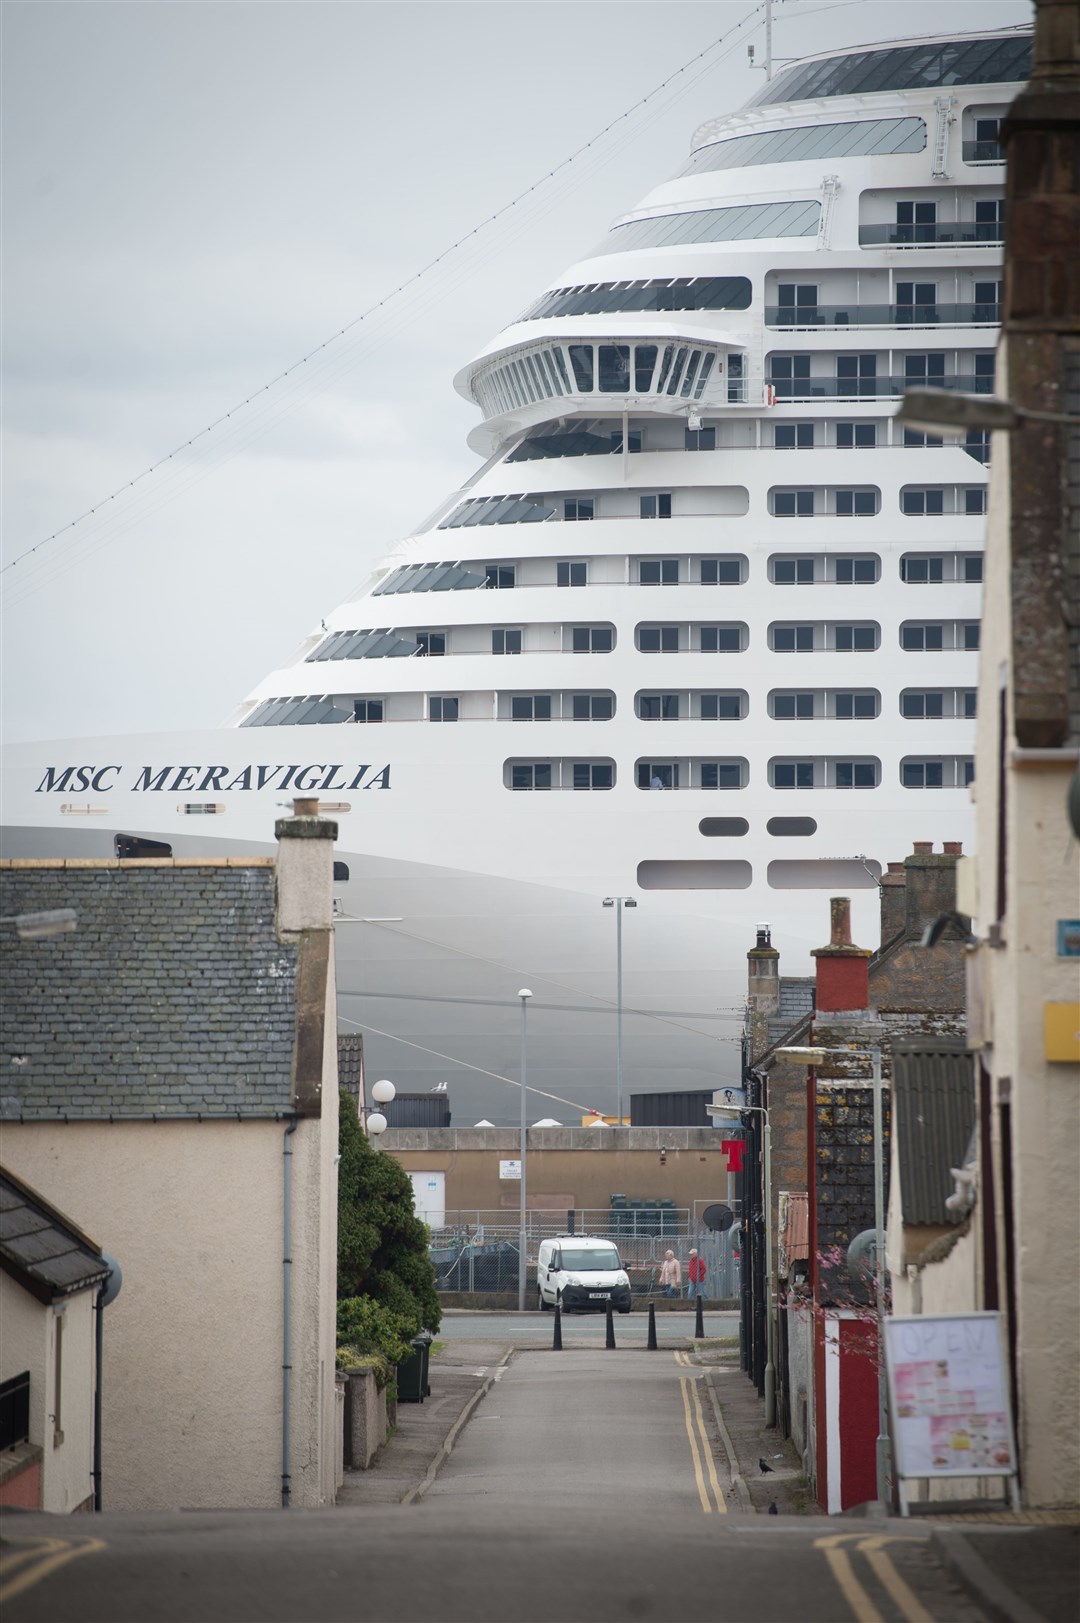 The massive MSC Meraviglia during an earlier visit to Invergordon. Picture: Callum Mackay